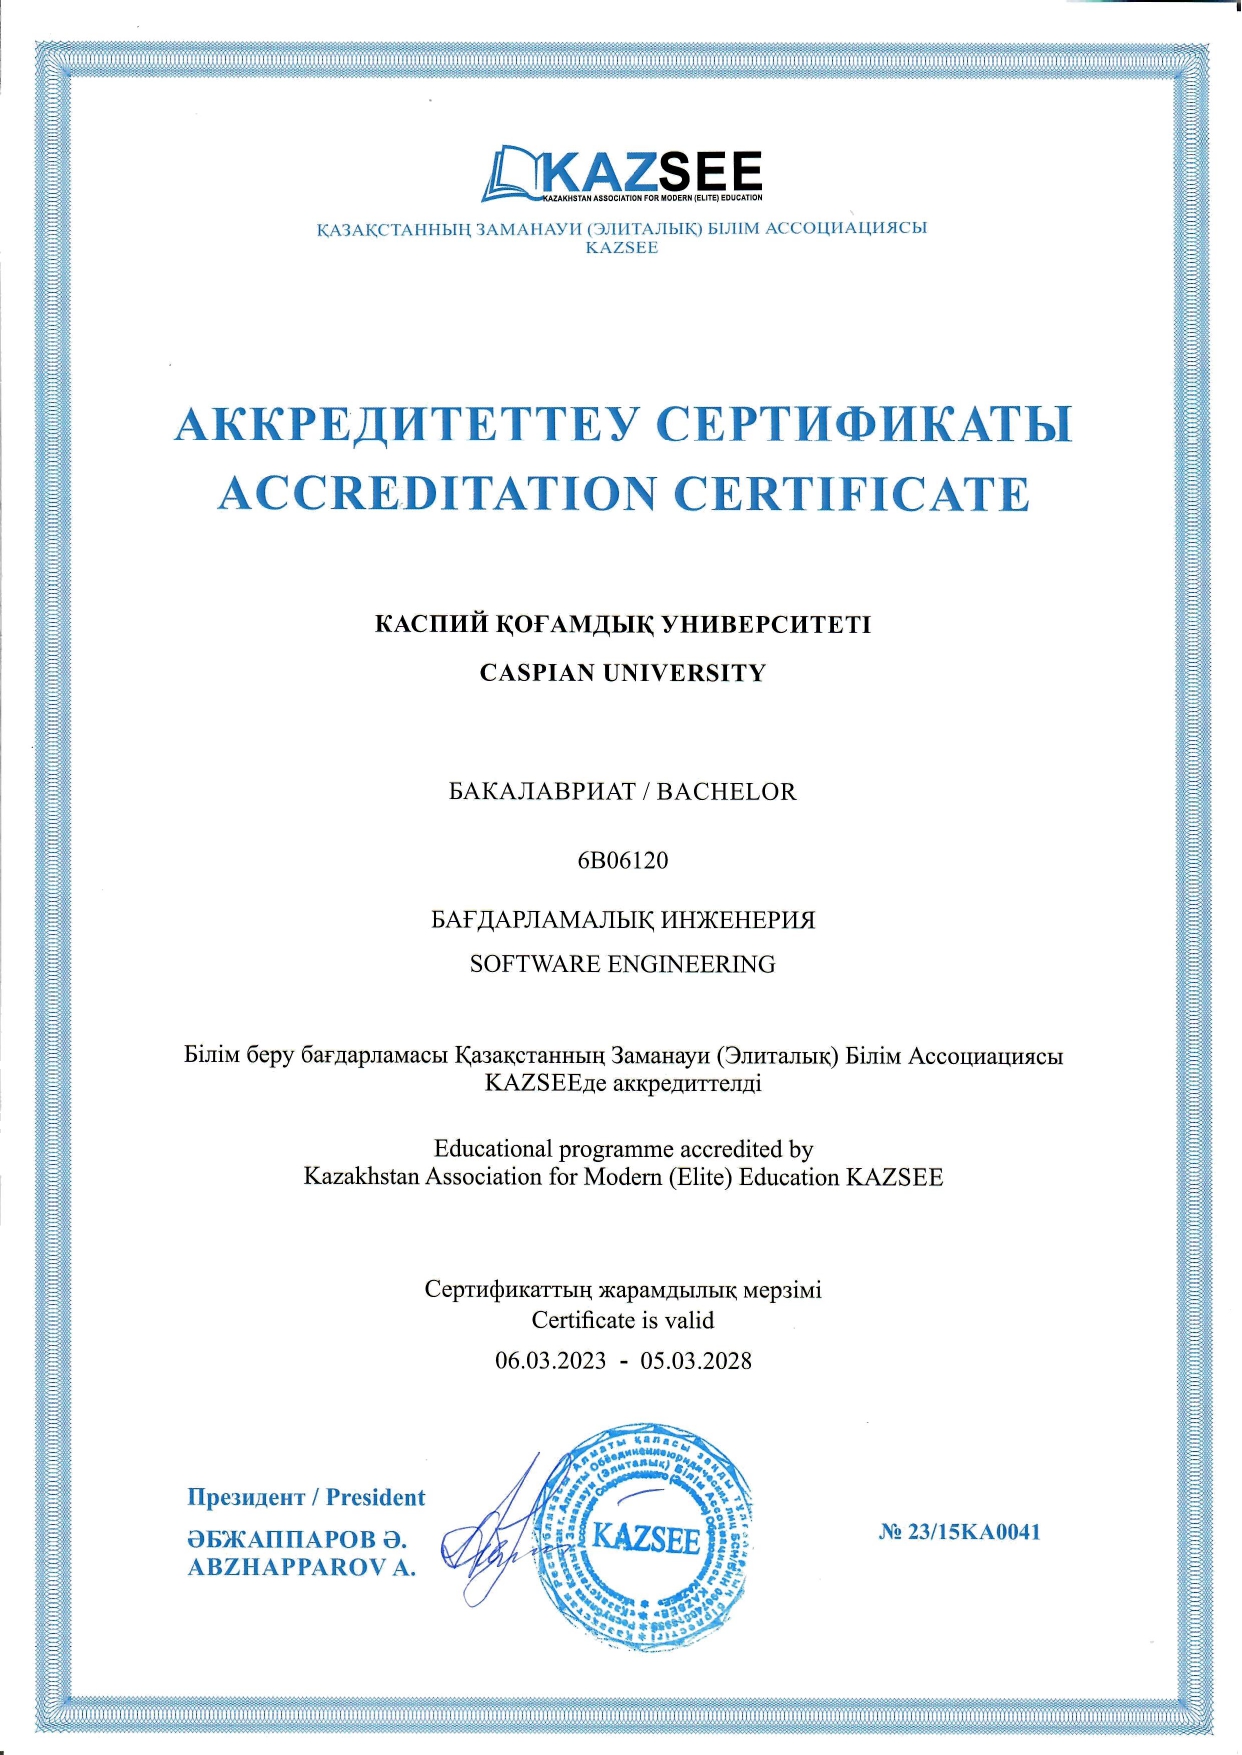 Certificate_Caspian university (1) (1)_page-0003